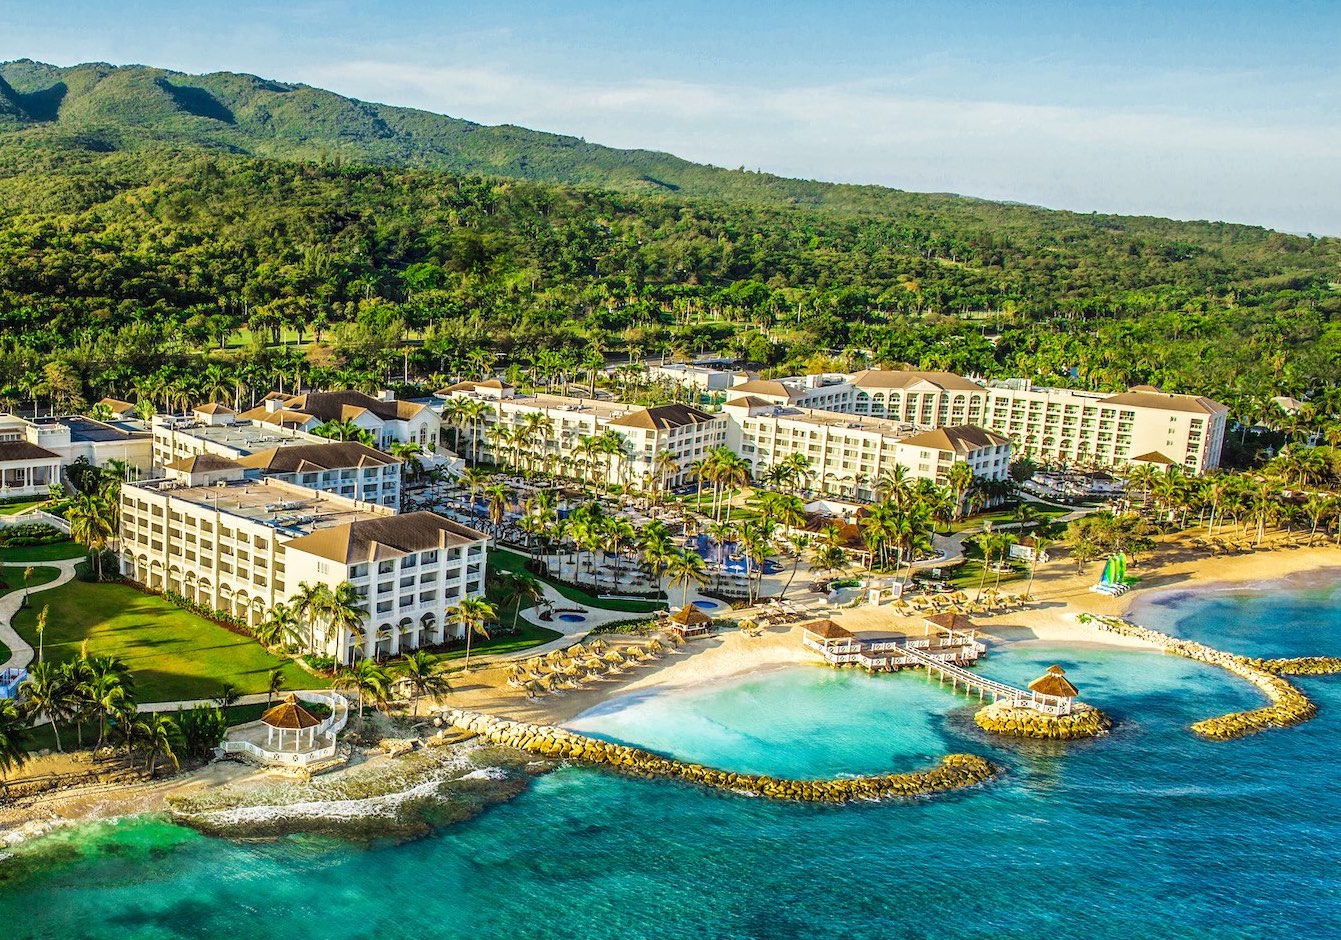 Aerial view of the Hyatt Rose Hall Resort in Jamaica